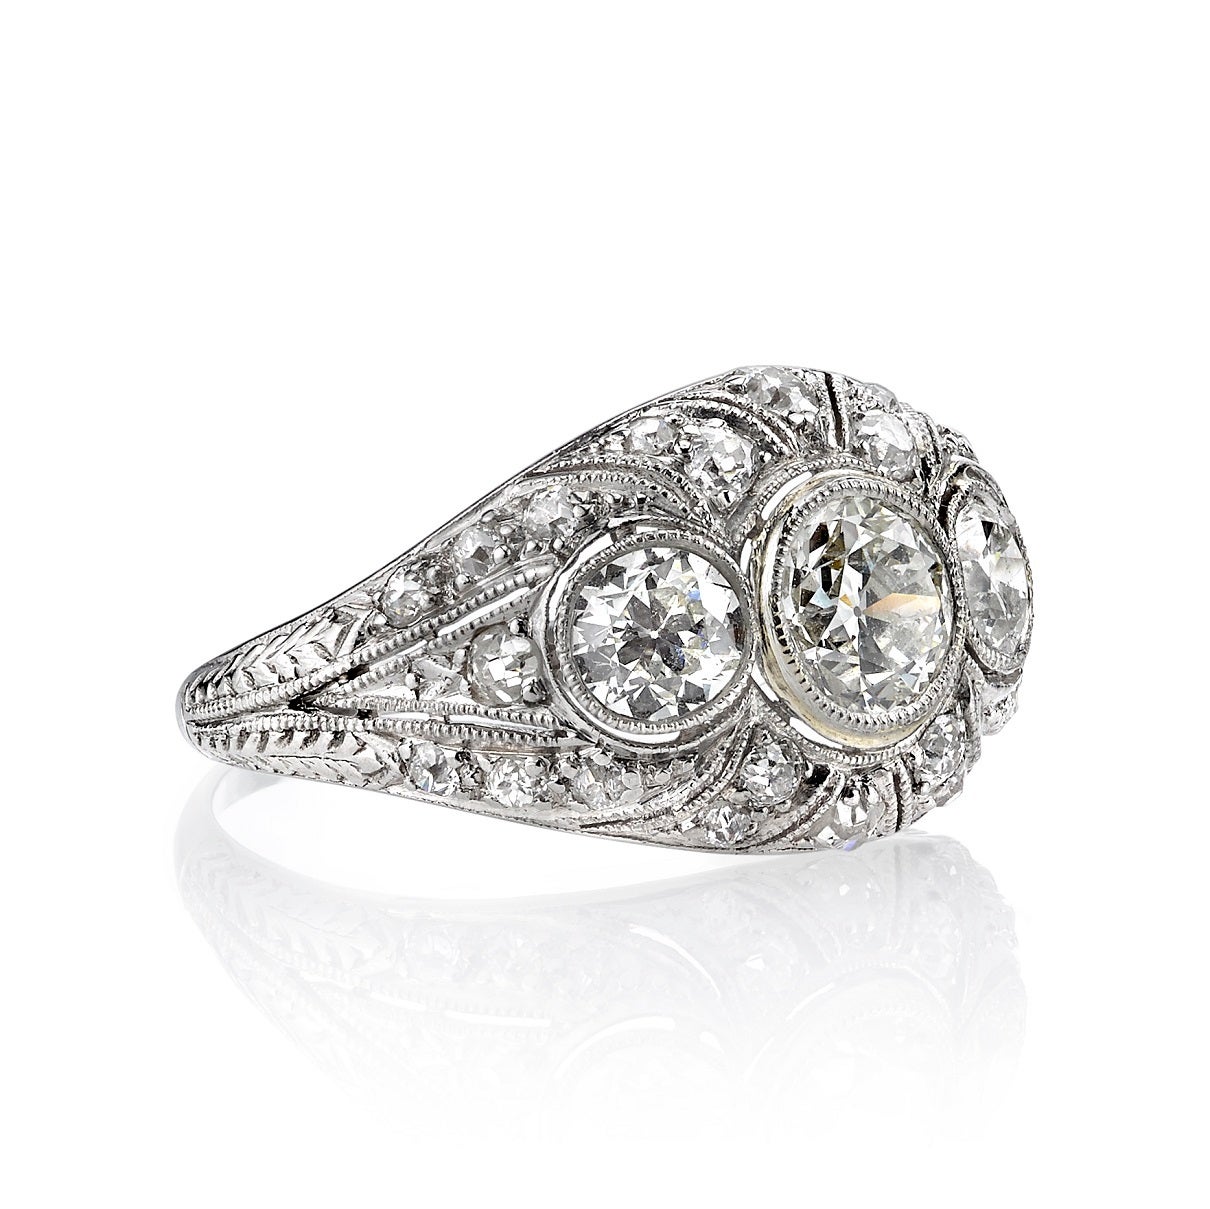 1.95ctw HI/VS old European cut diamonds set in a vintage platinum mounting. Circa 1920. A romantic three stone 